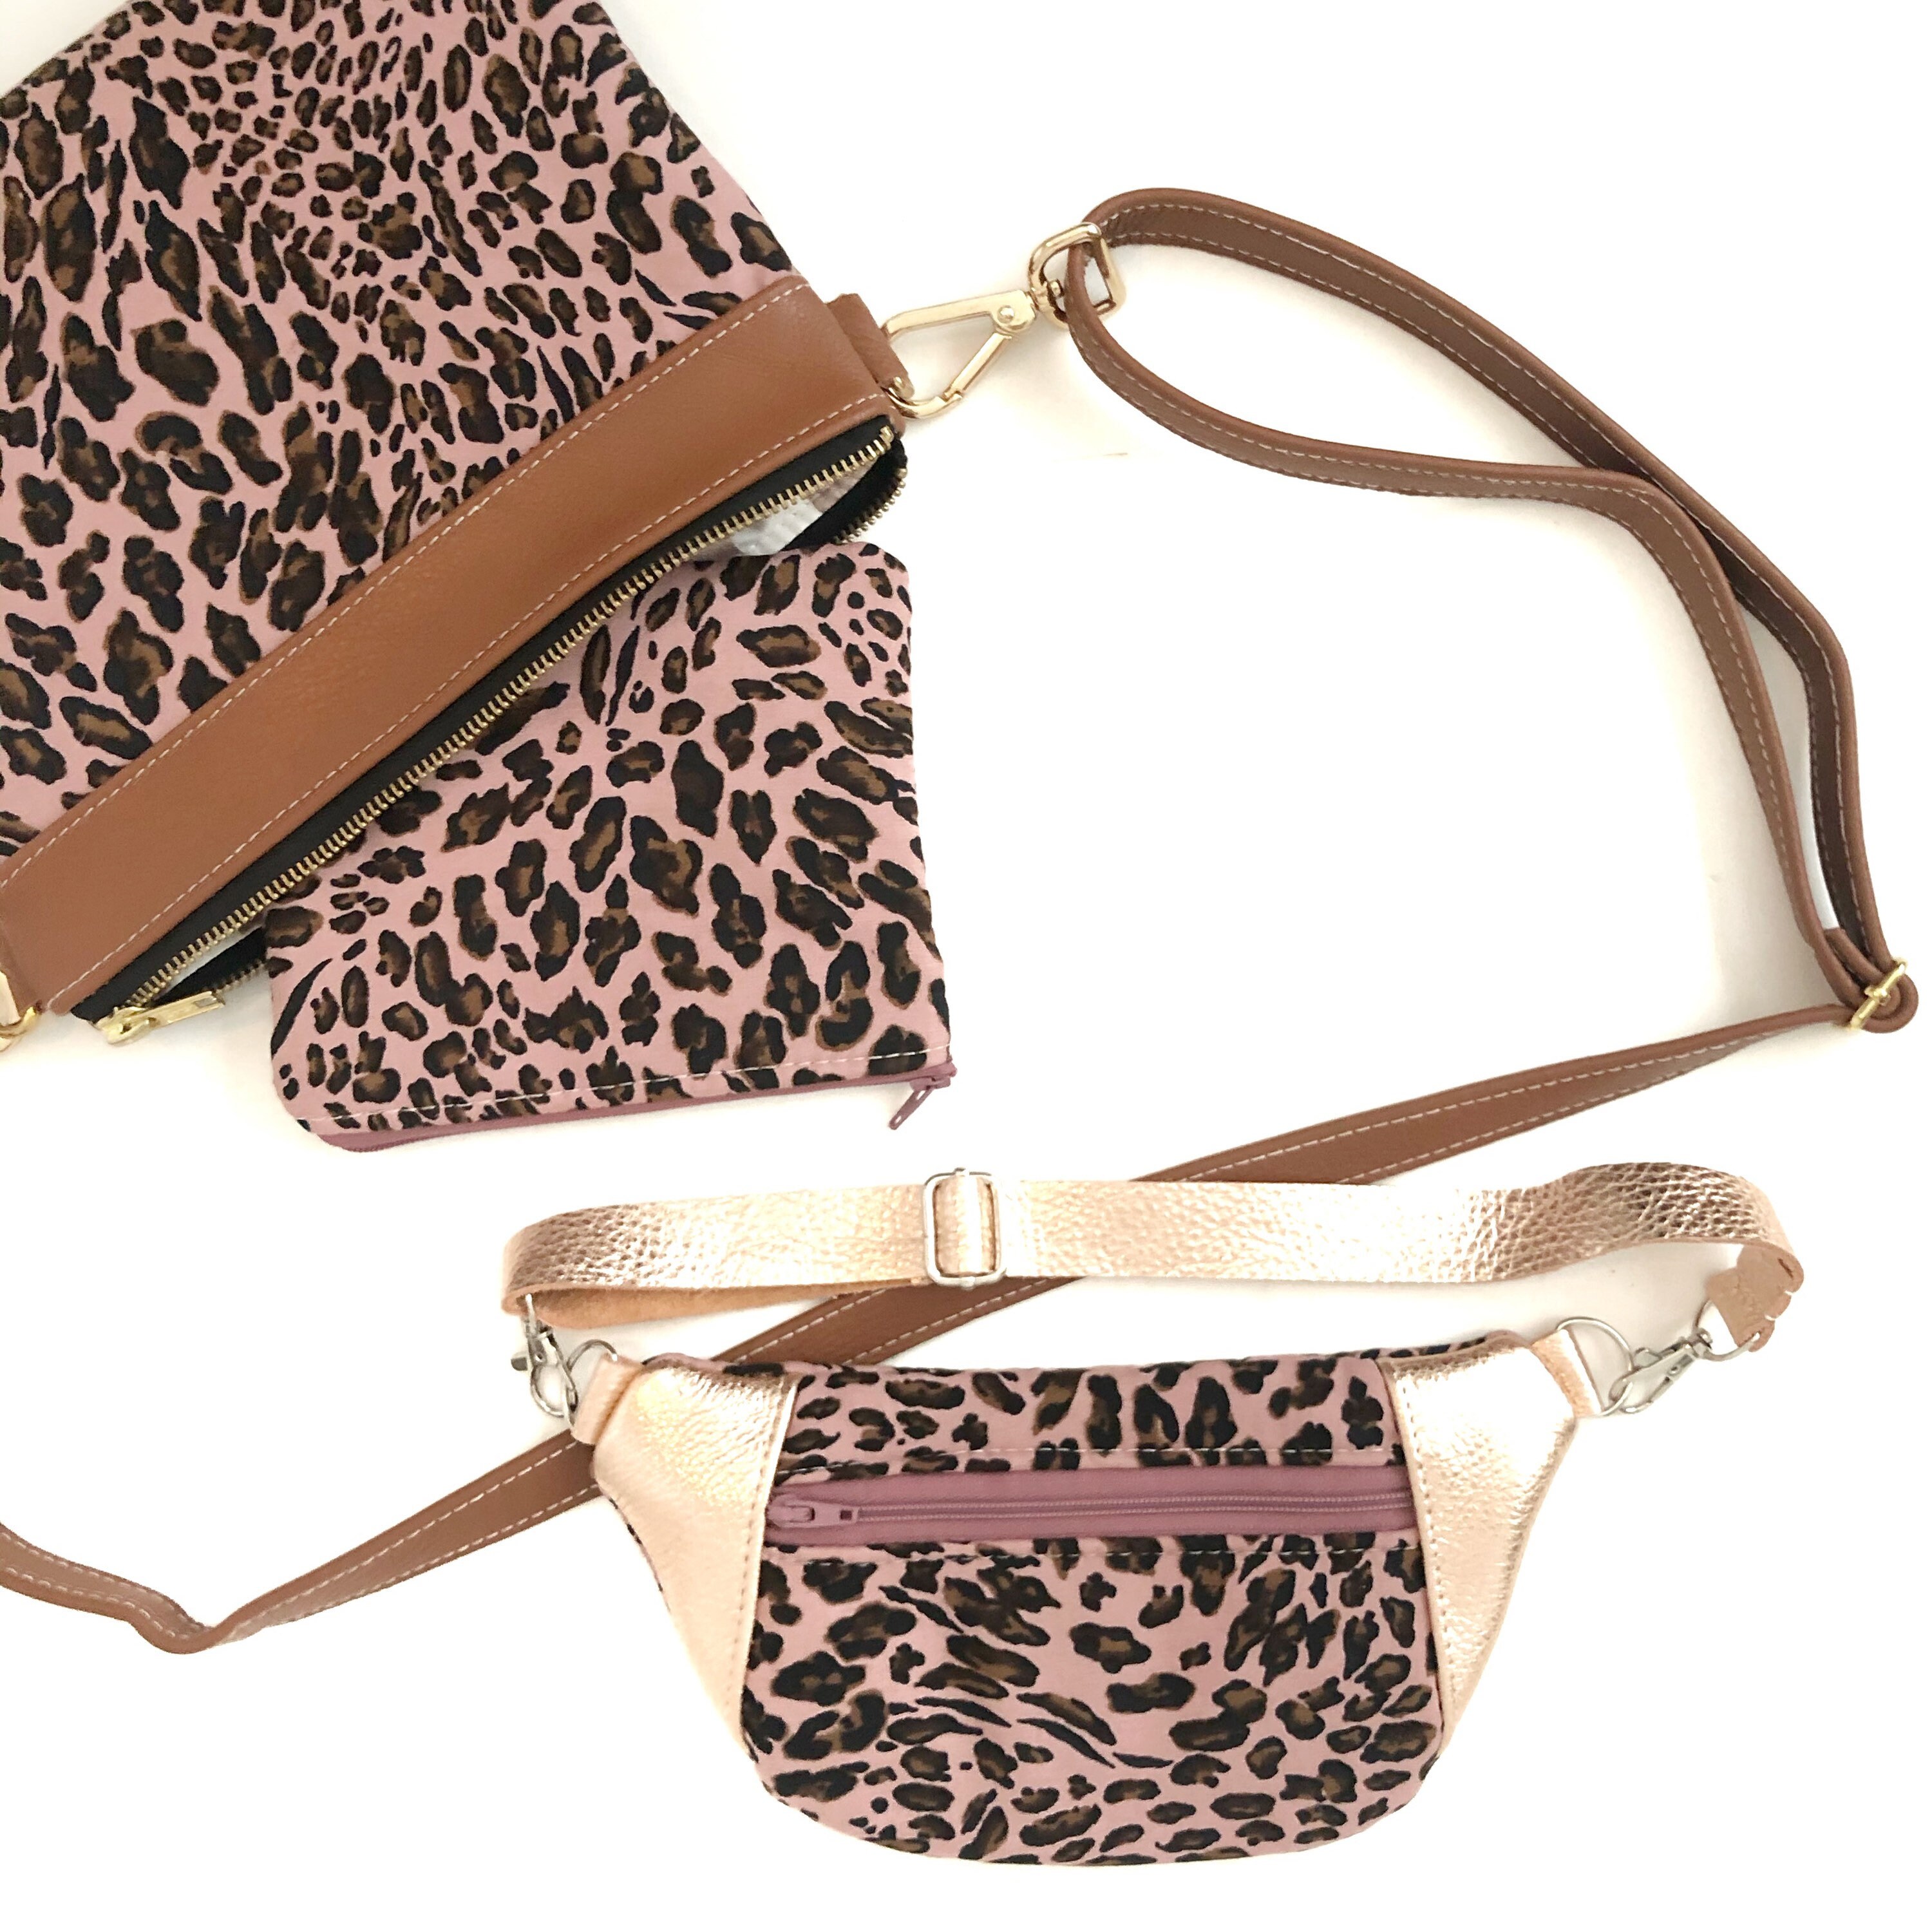 Kids Mermaid Fanny Pack Rose Gold Leopard leather bag | Etsy